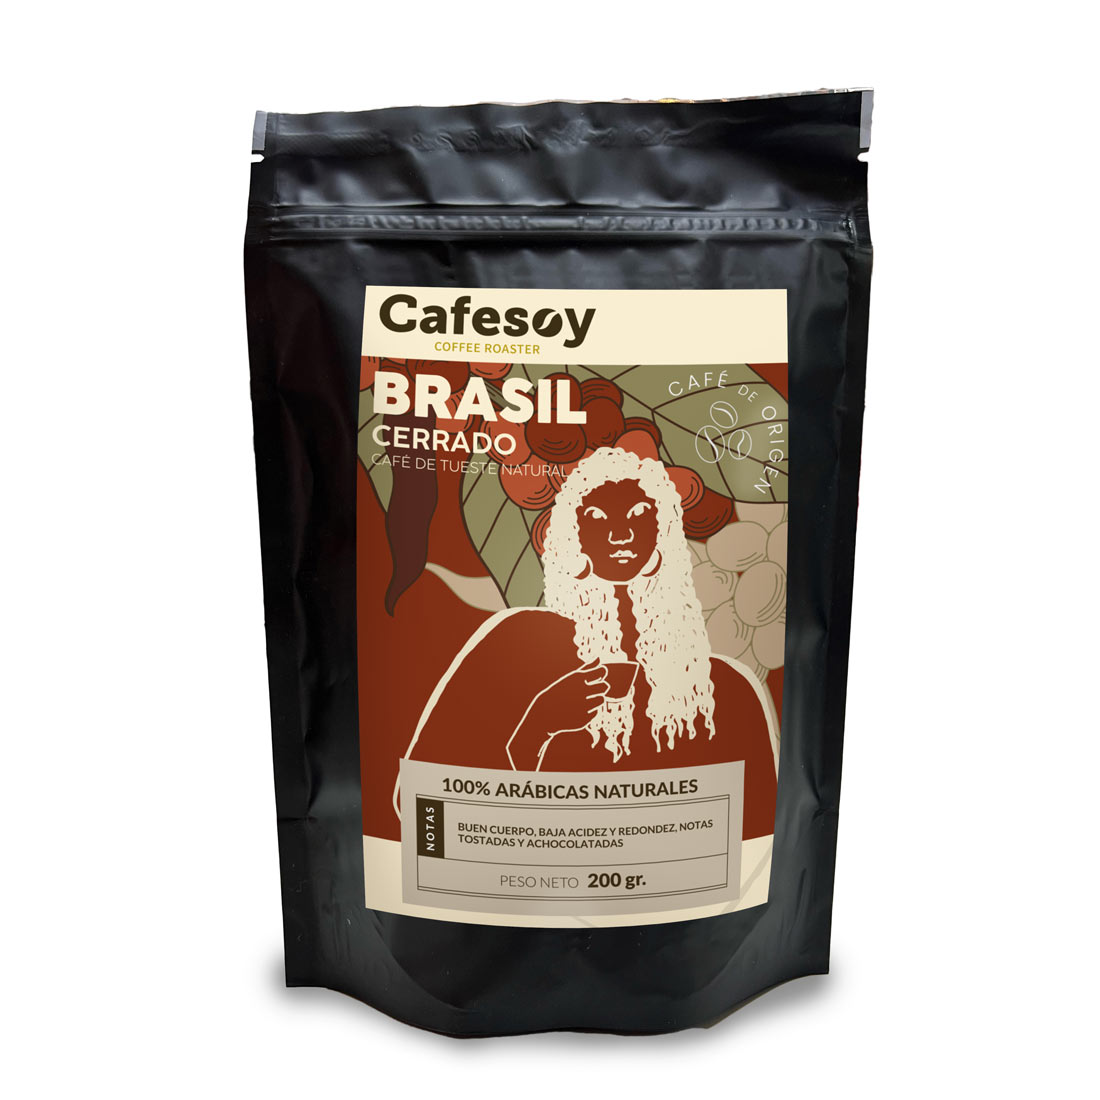 1-comprar-cafe-seleccion-originen-brasil-online-precio-calidad-cafesoy-v1